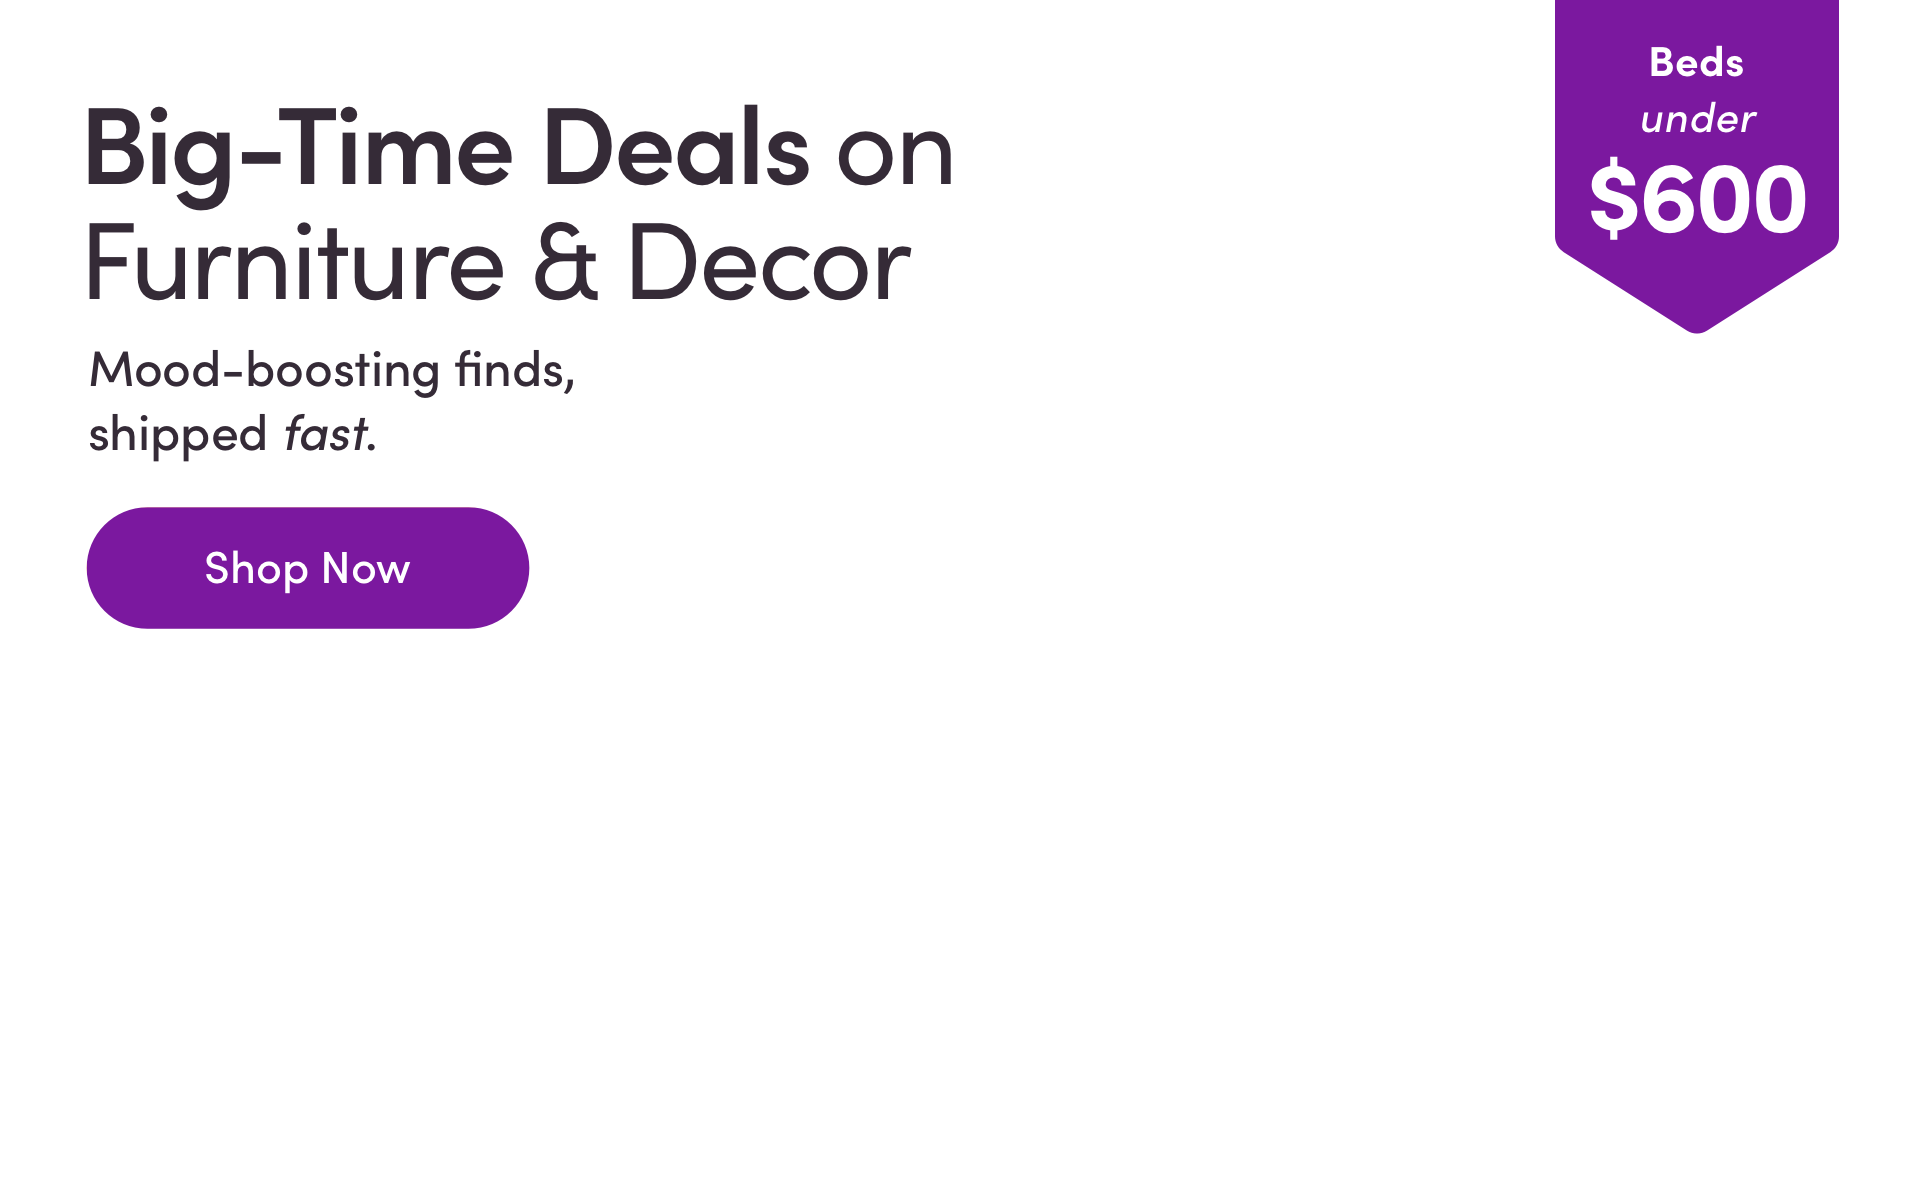 Beds Under $600. Big-Time Deals on Furniture & Decor. Mood-boosting finds, shipped fast. Shop Now.